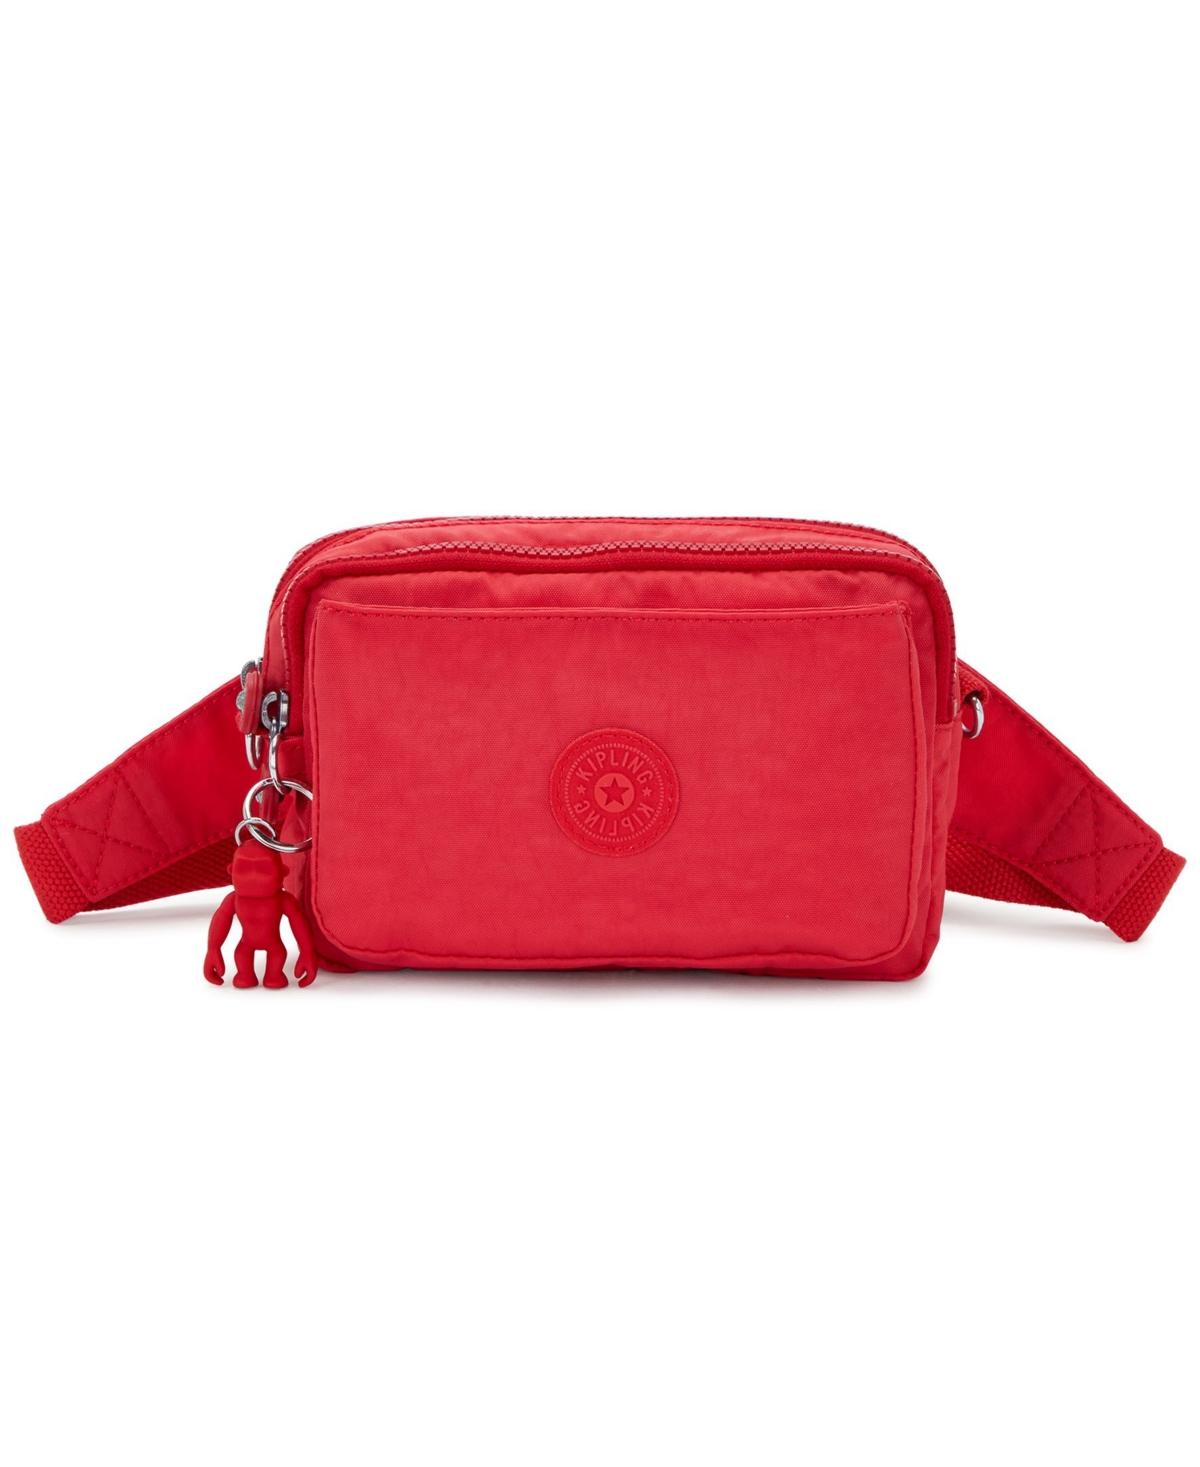 Kipling Abanu Mini Convertible Sling Bag in Red | Lyst